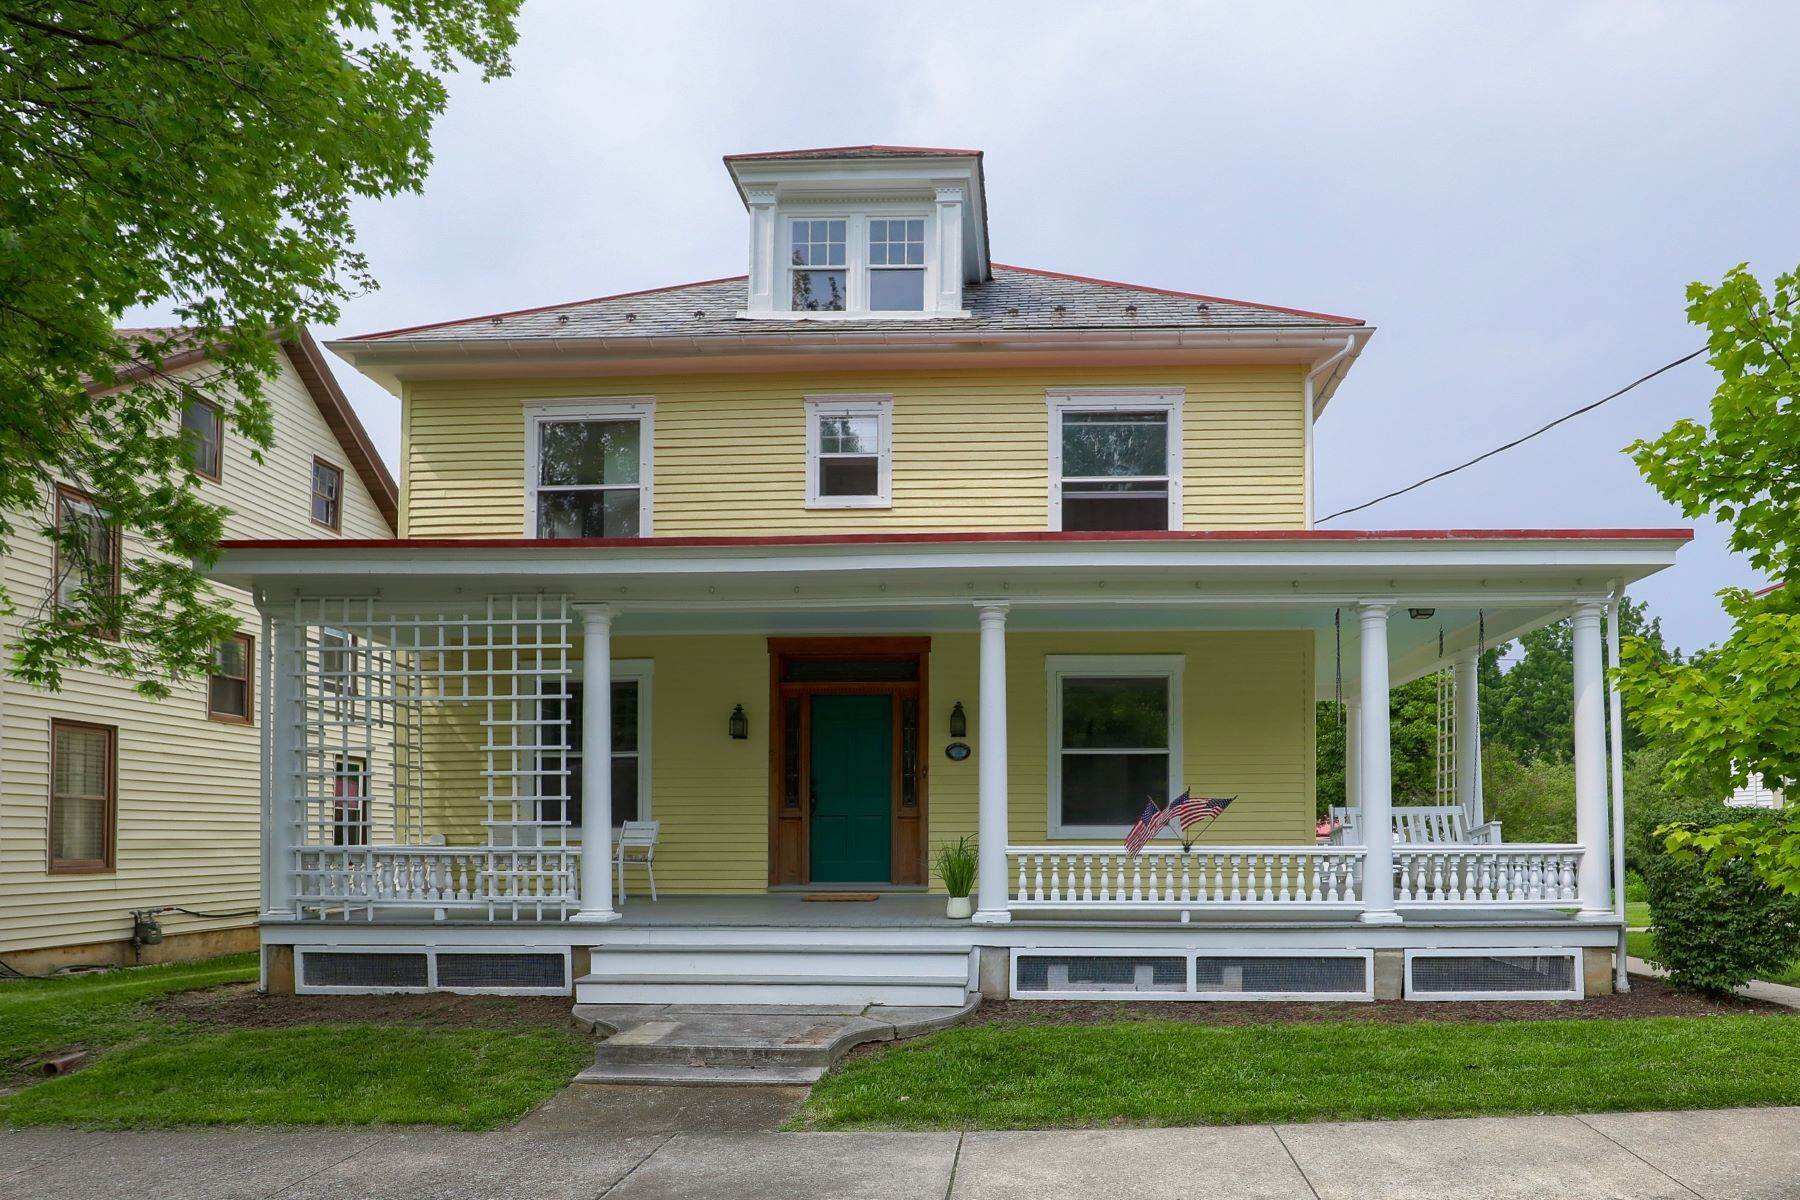 Single Family Homes for Sale at 507 E Main St Lititz, Pennsylvania 17543 United States